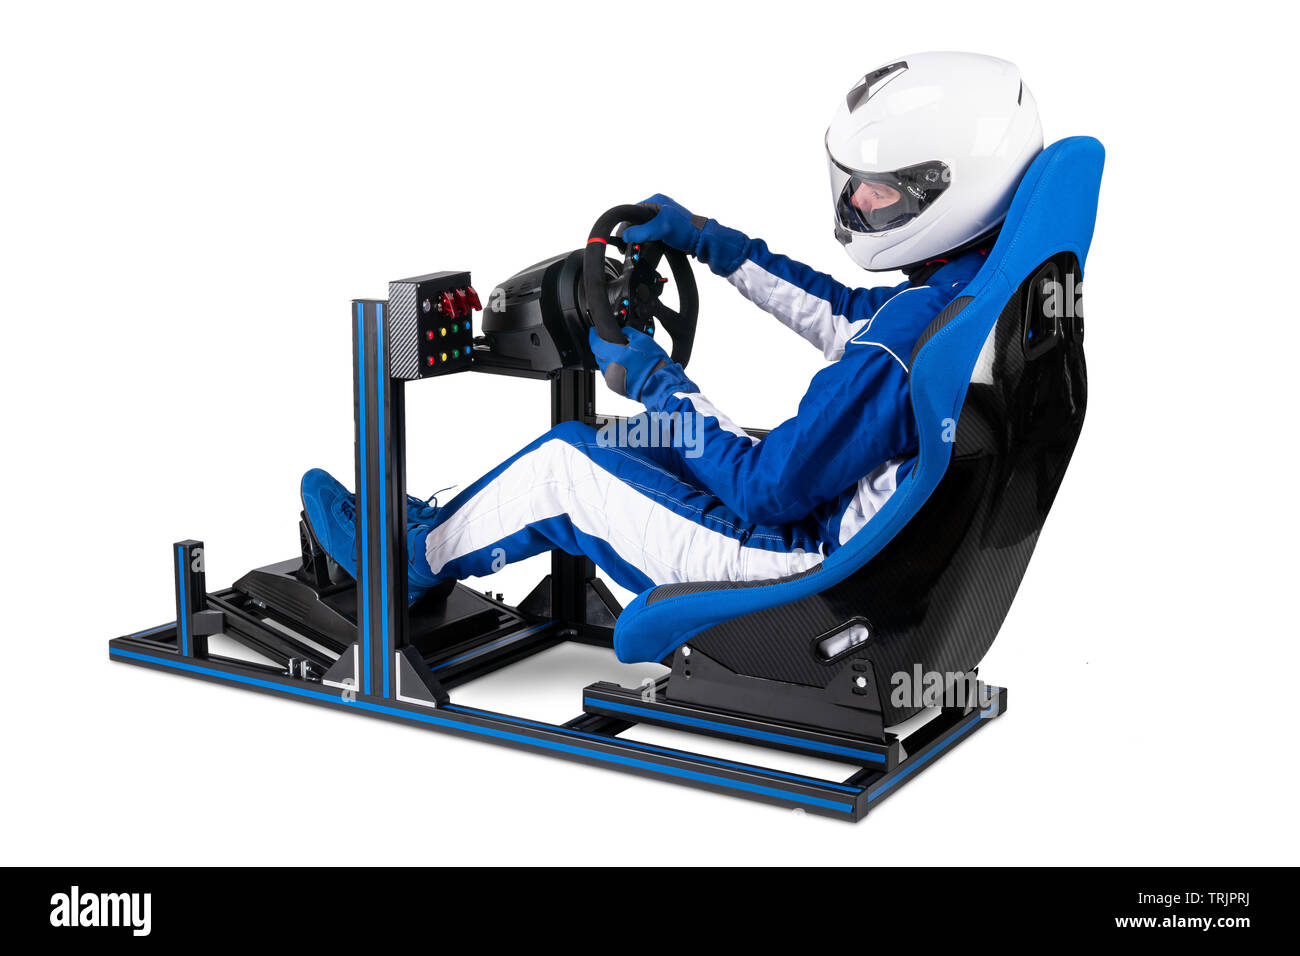 Race Driver in Blau insgesamt mit Helm, das auf simracing Aluminium  simulator Rig für video spiel racing. Motorsport auto Schalensitz Lenkrad p  Stockfotografie - Alamy